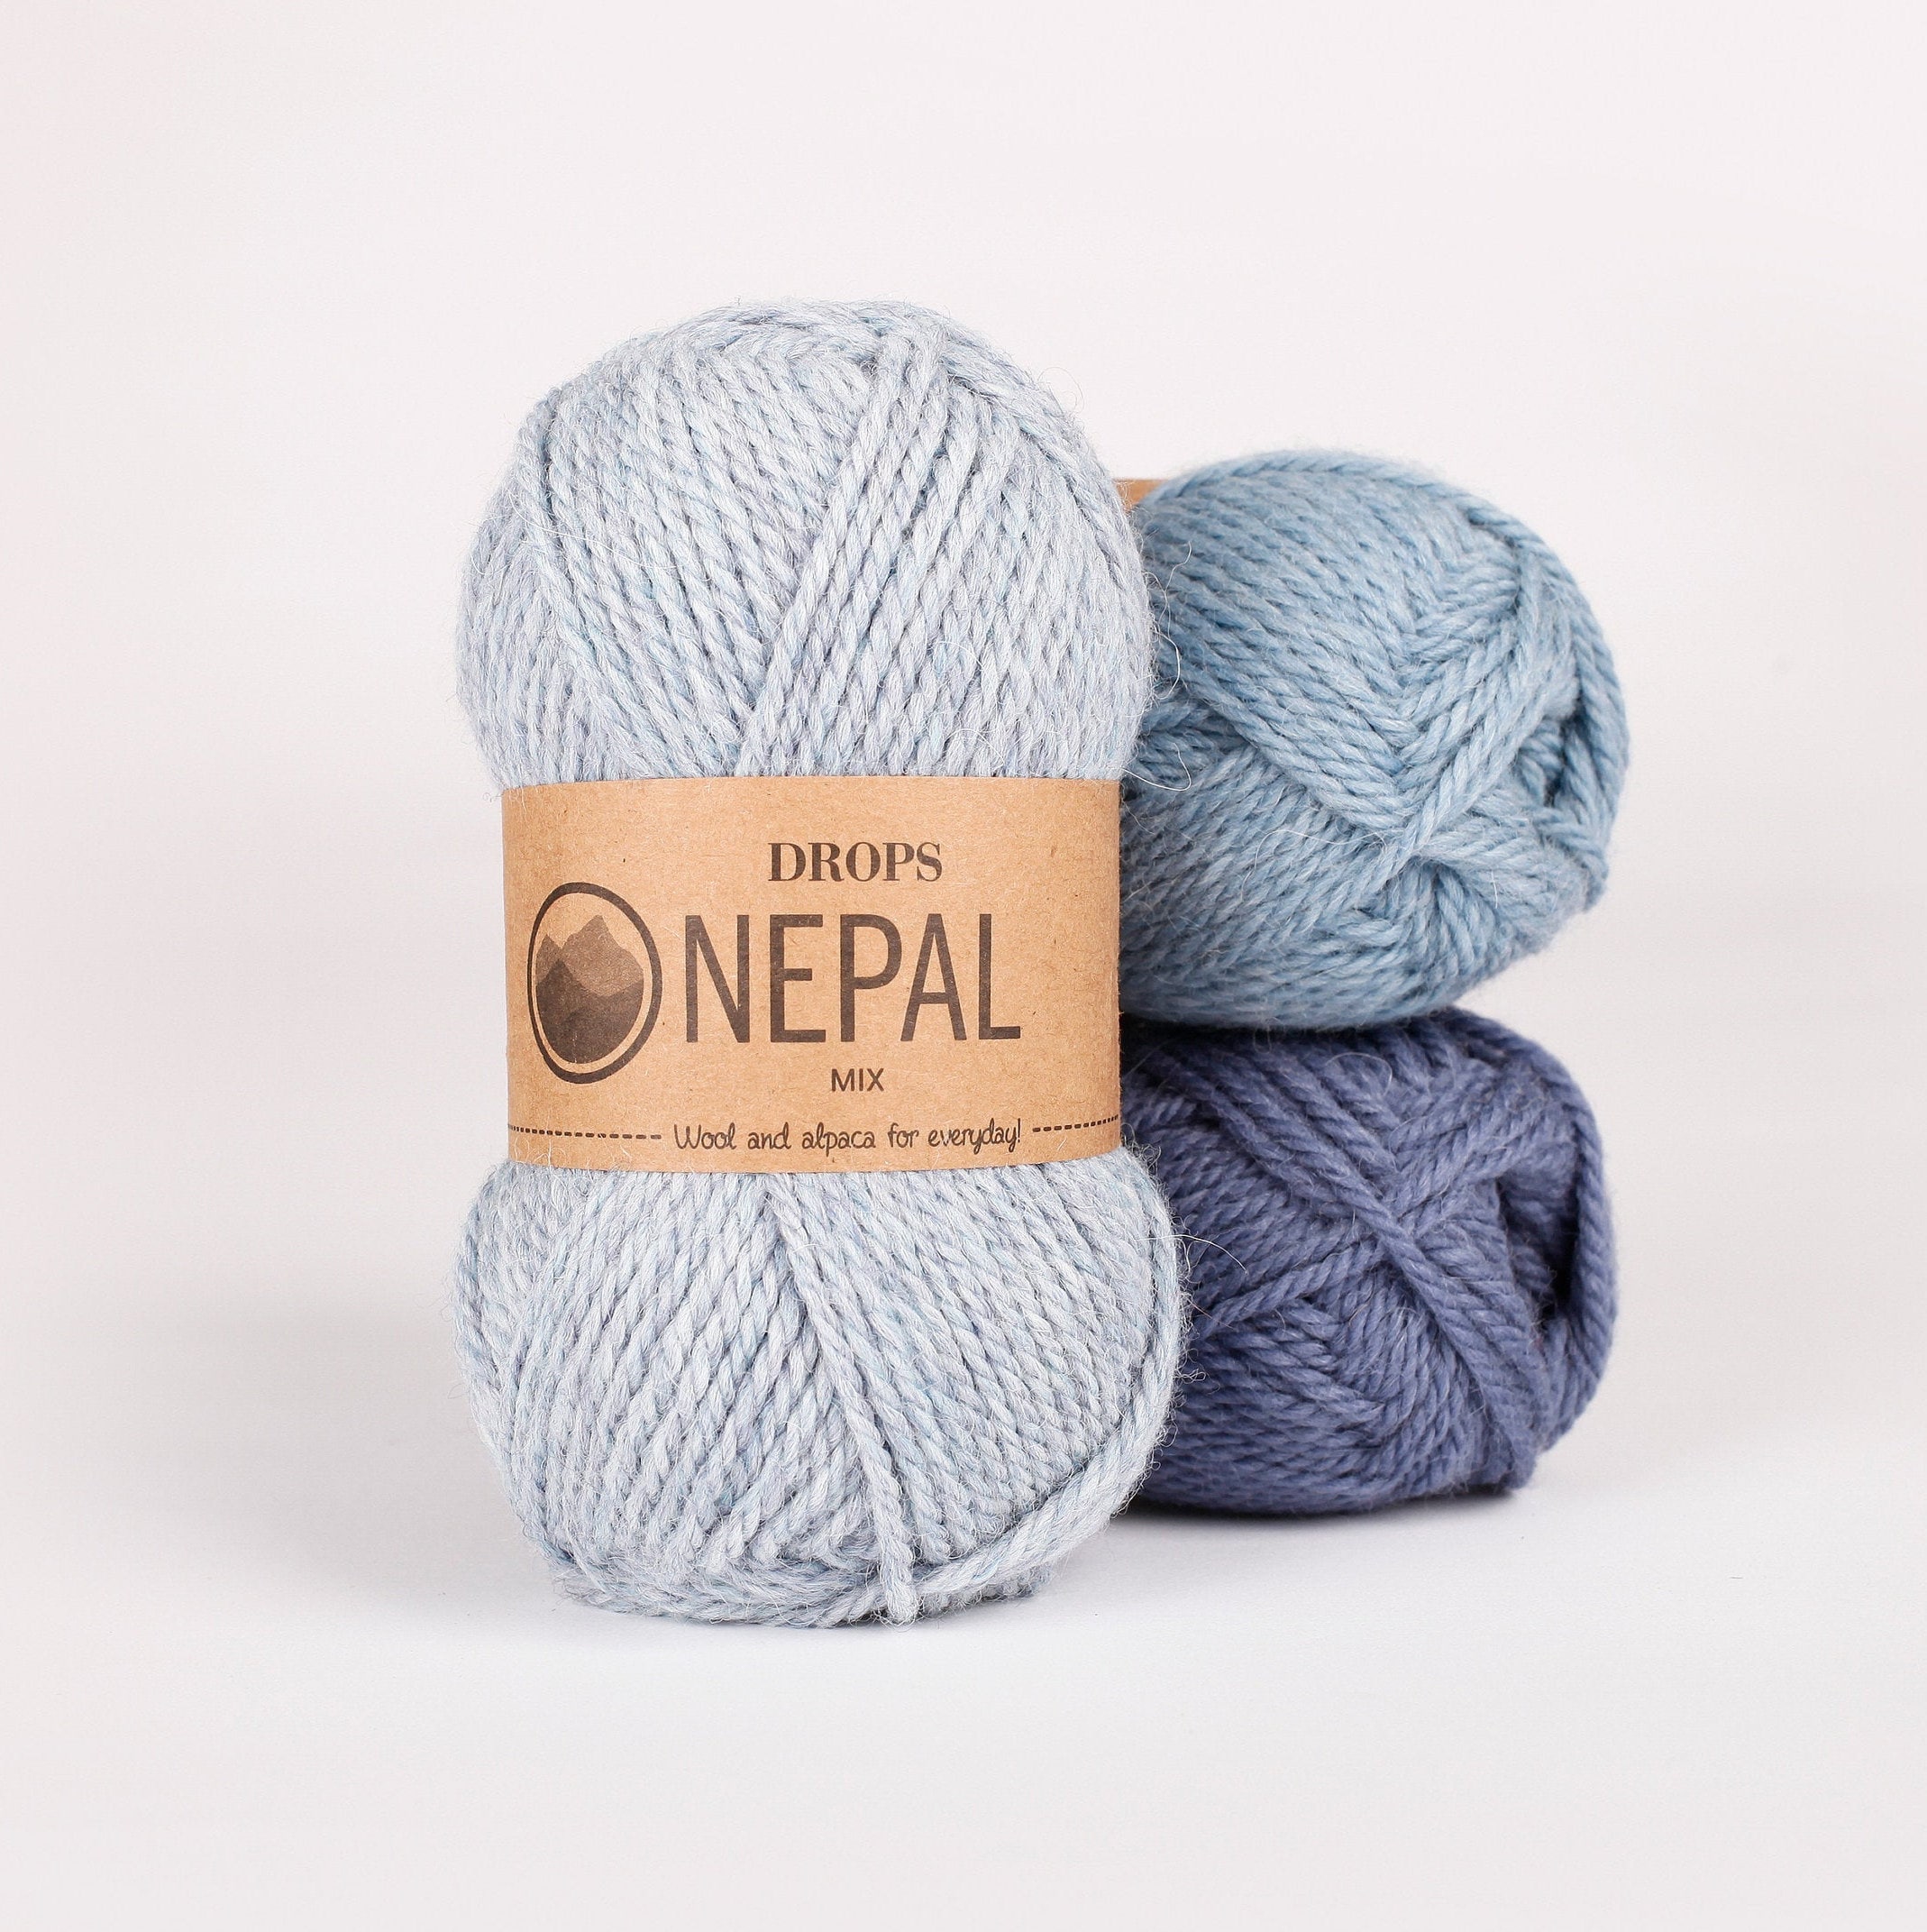 82 Yards Superfine Alpaca and Peruvian Highland Wool Yarn Drops Nepal 1.8 oz Ball Aran Worsted Weight 0618 Camel 4 or Medium 